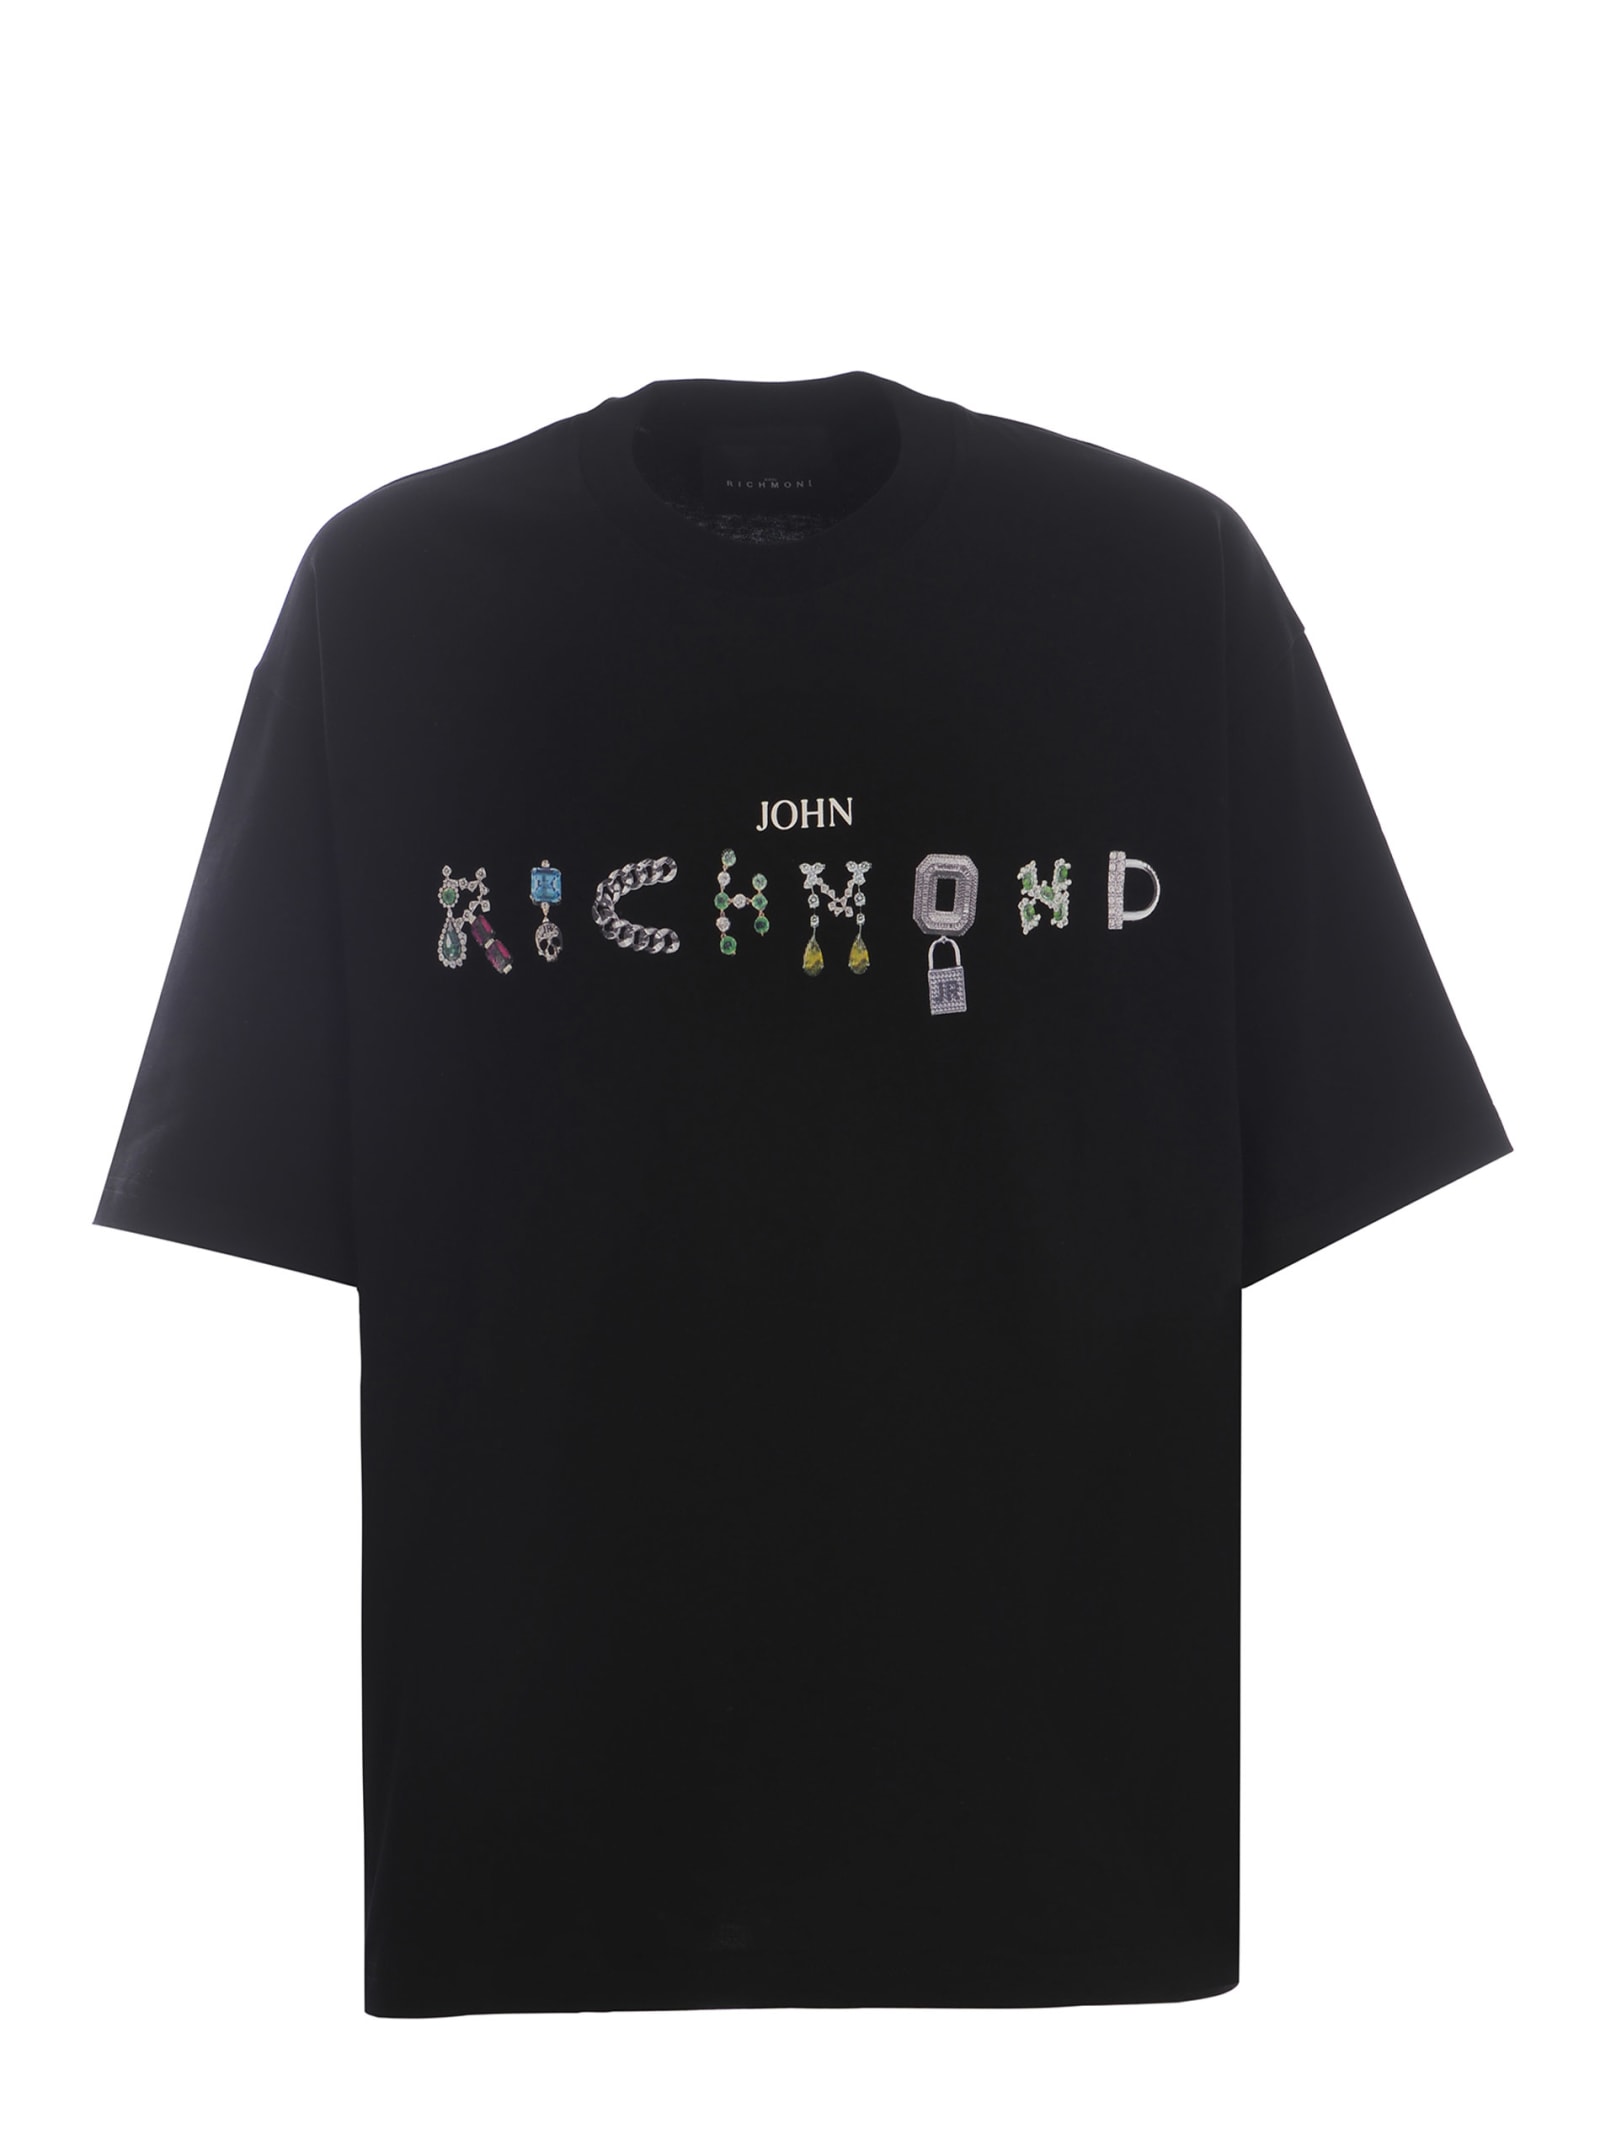 RICHMOND T-SHIRT RICHMOND MADE OF COTTON